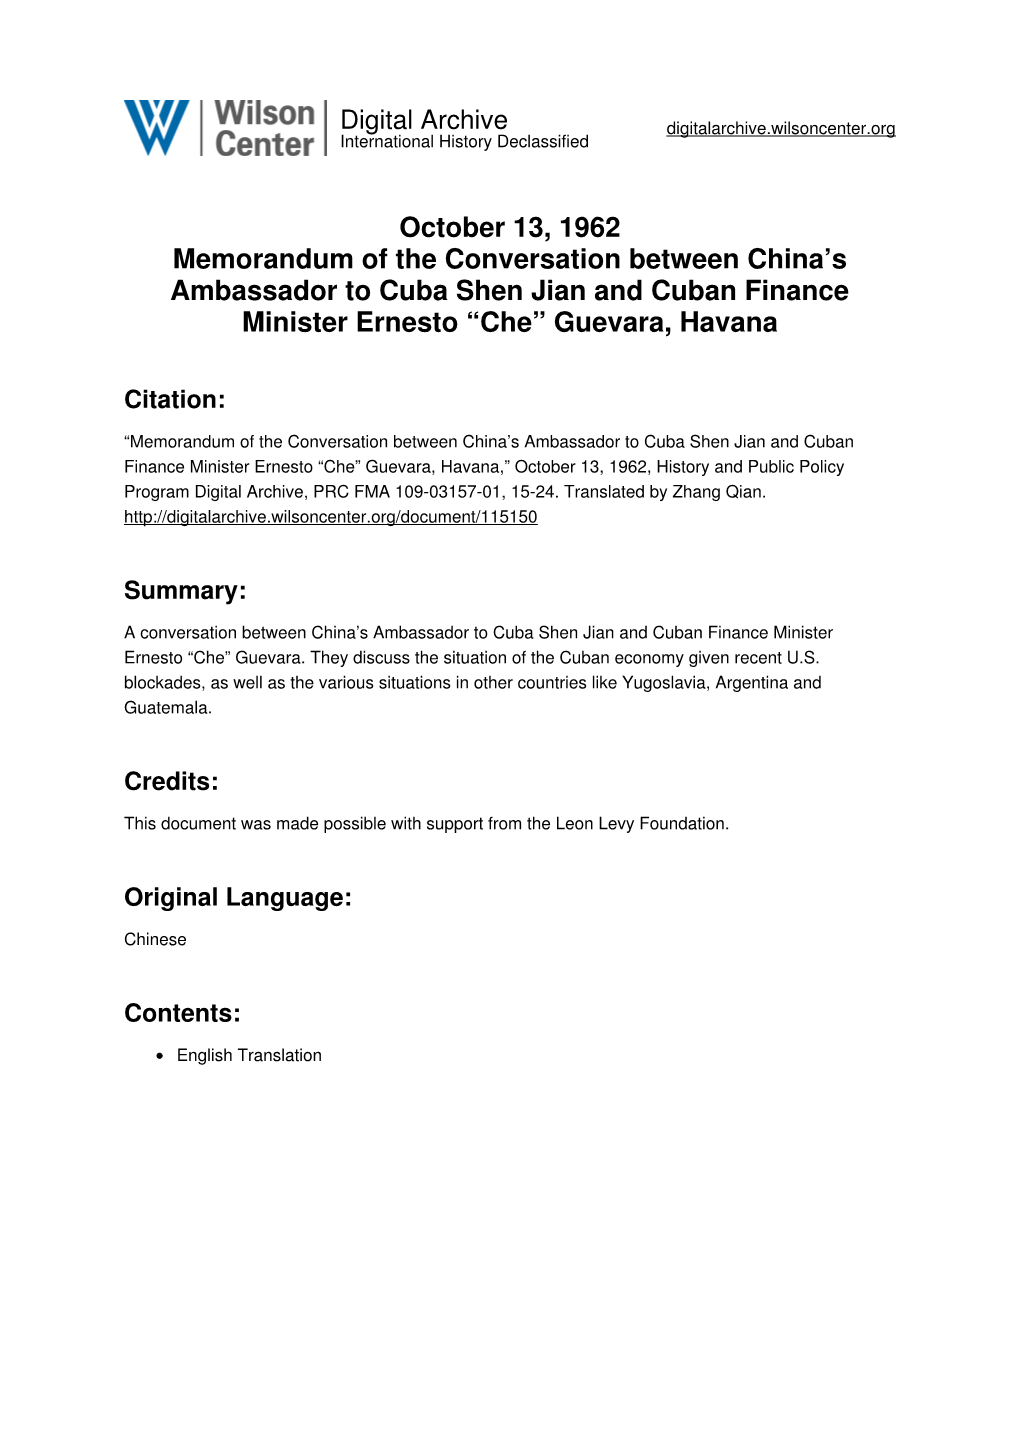 October 13, 1962 Memorandum of the Conversation Between China's